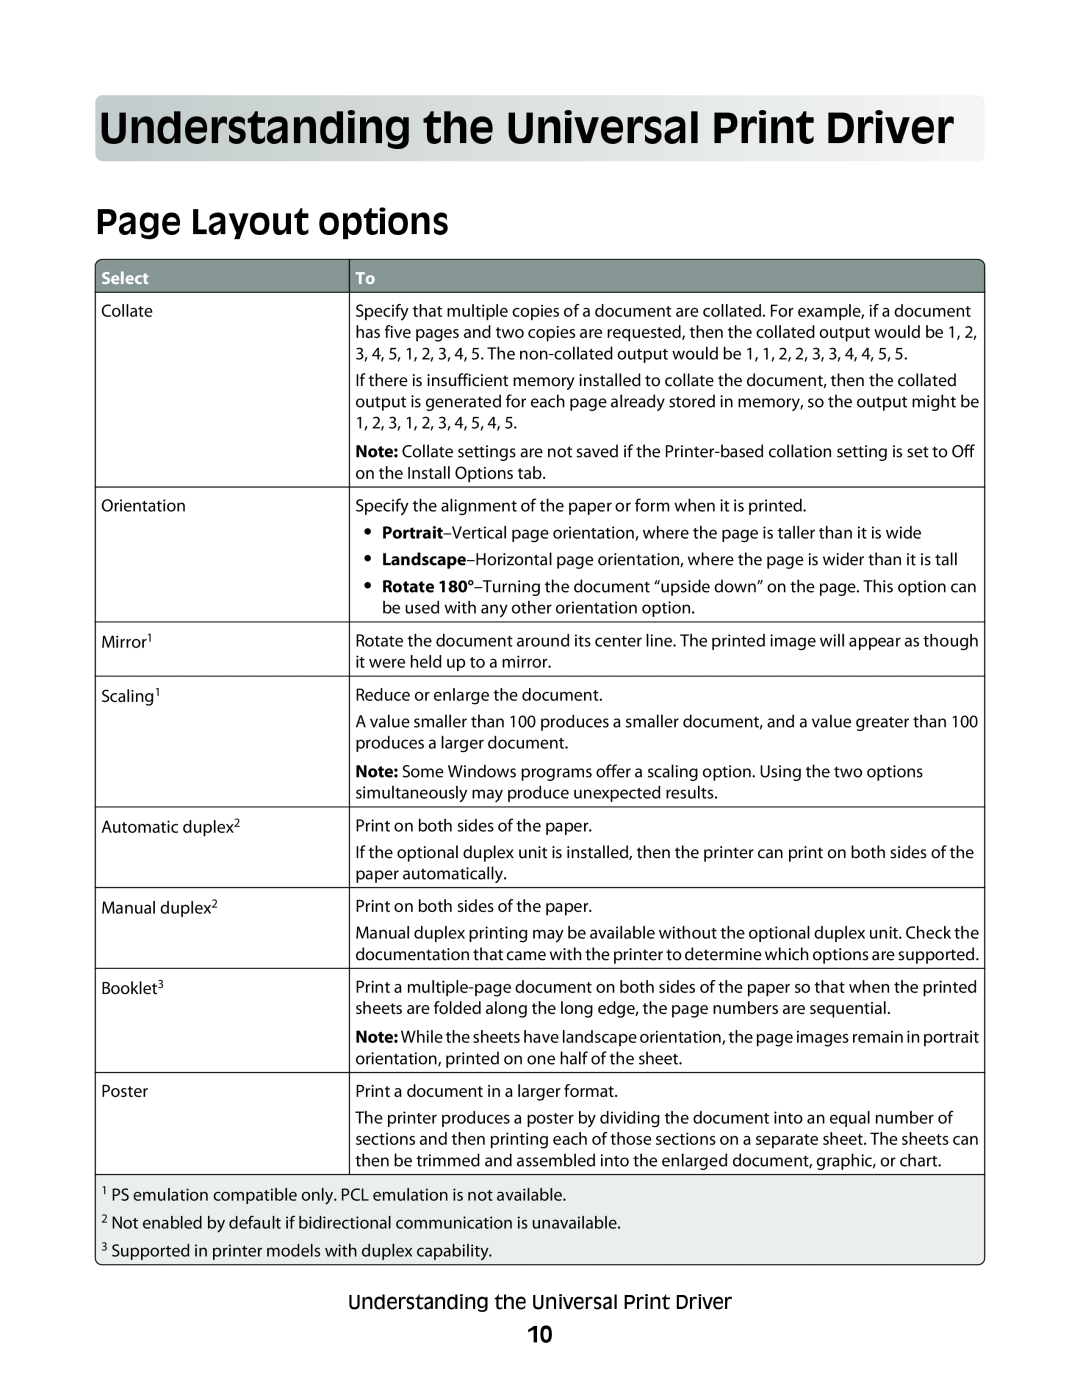 Lexmark Universal Driver manual Und erstandingtheUniversalPrintD river, Page Layout options, Select 